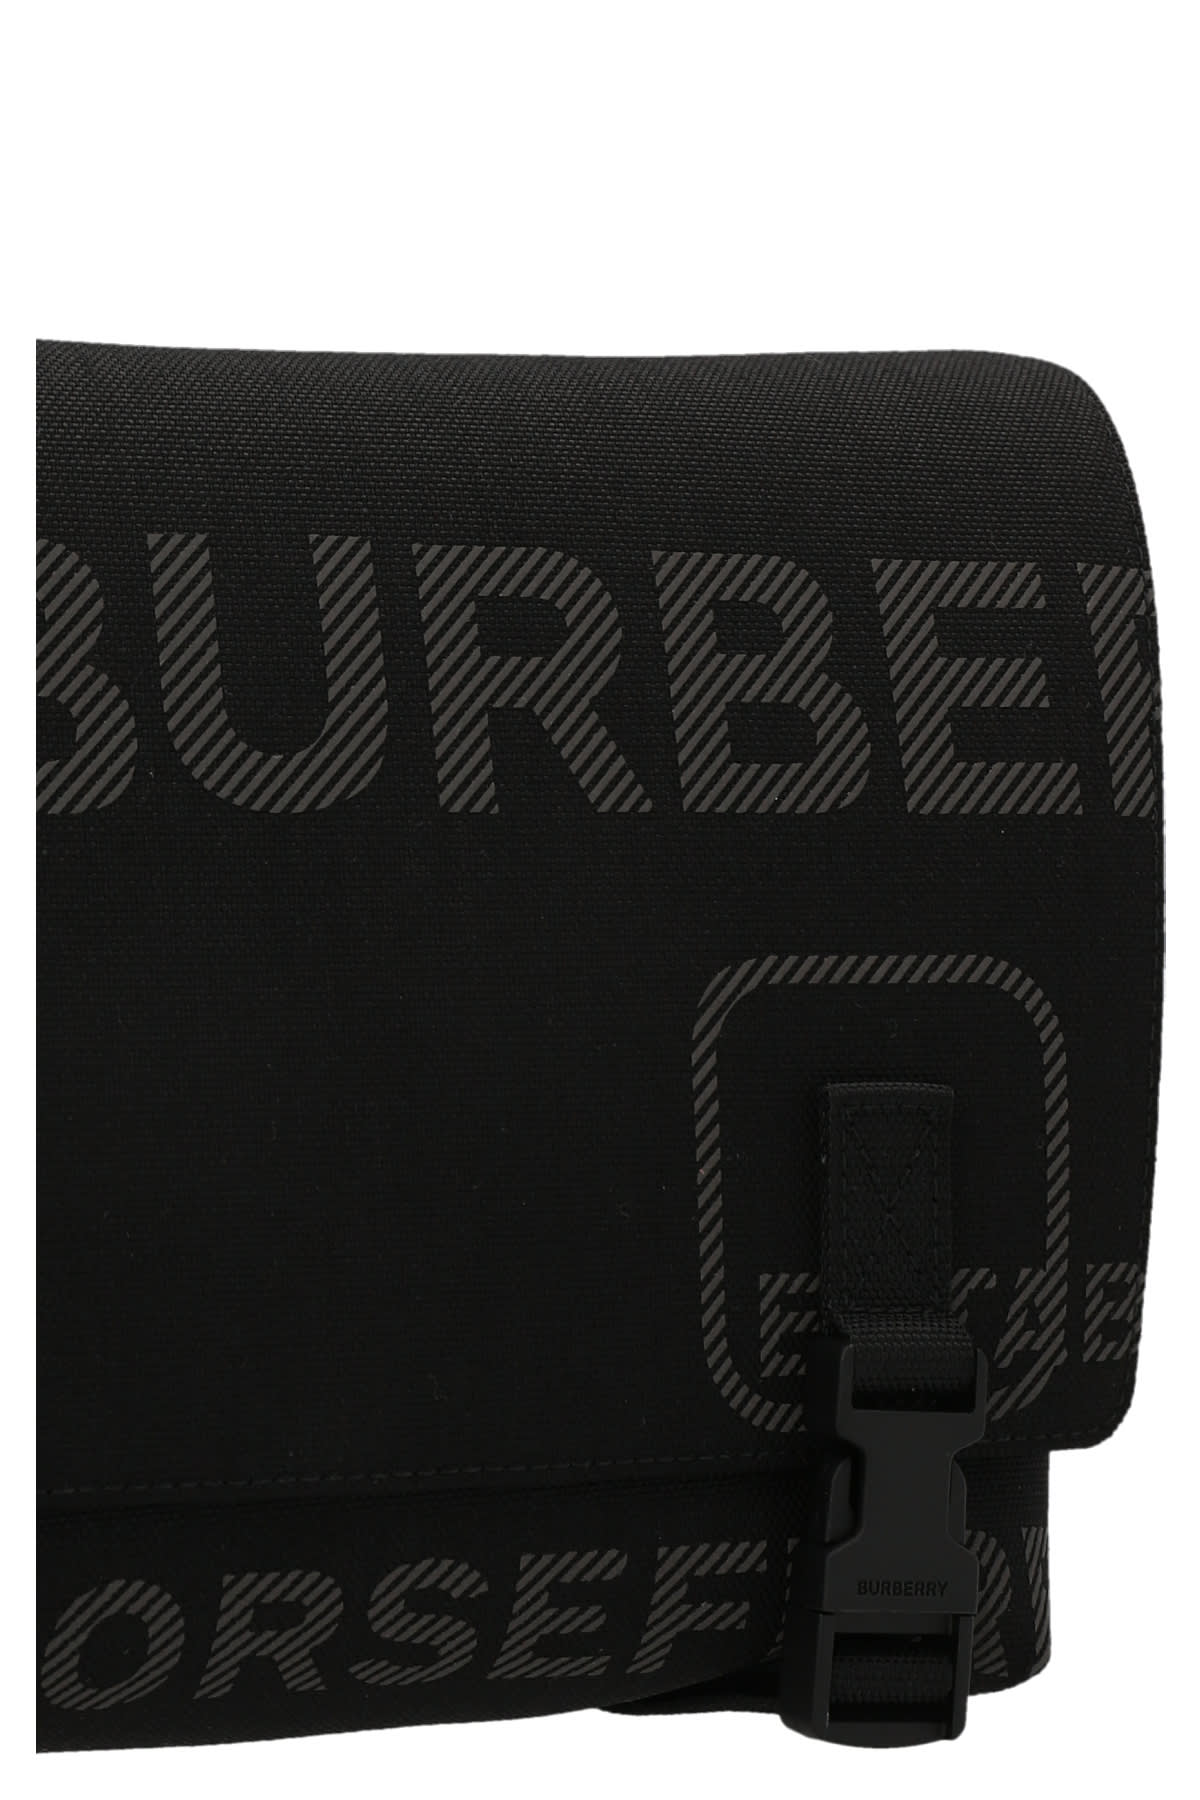 Burberry Messenger Lock Leather Cross Body Bag